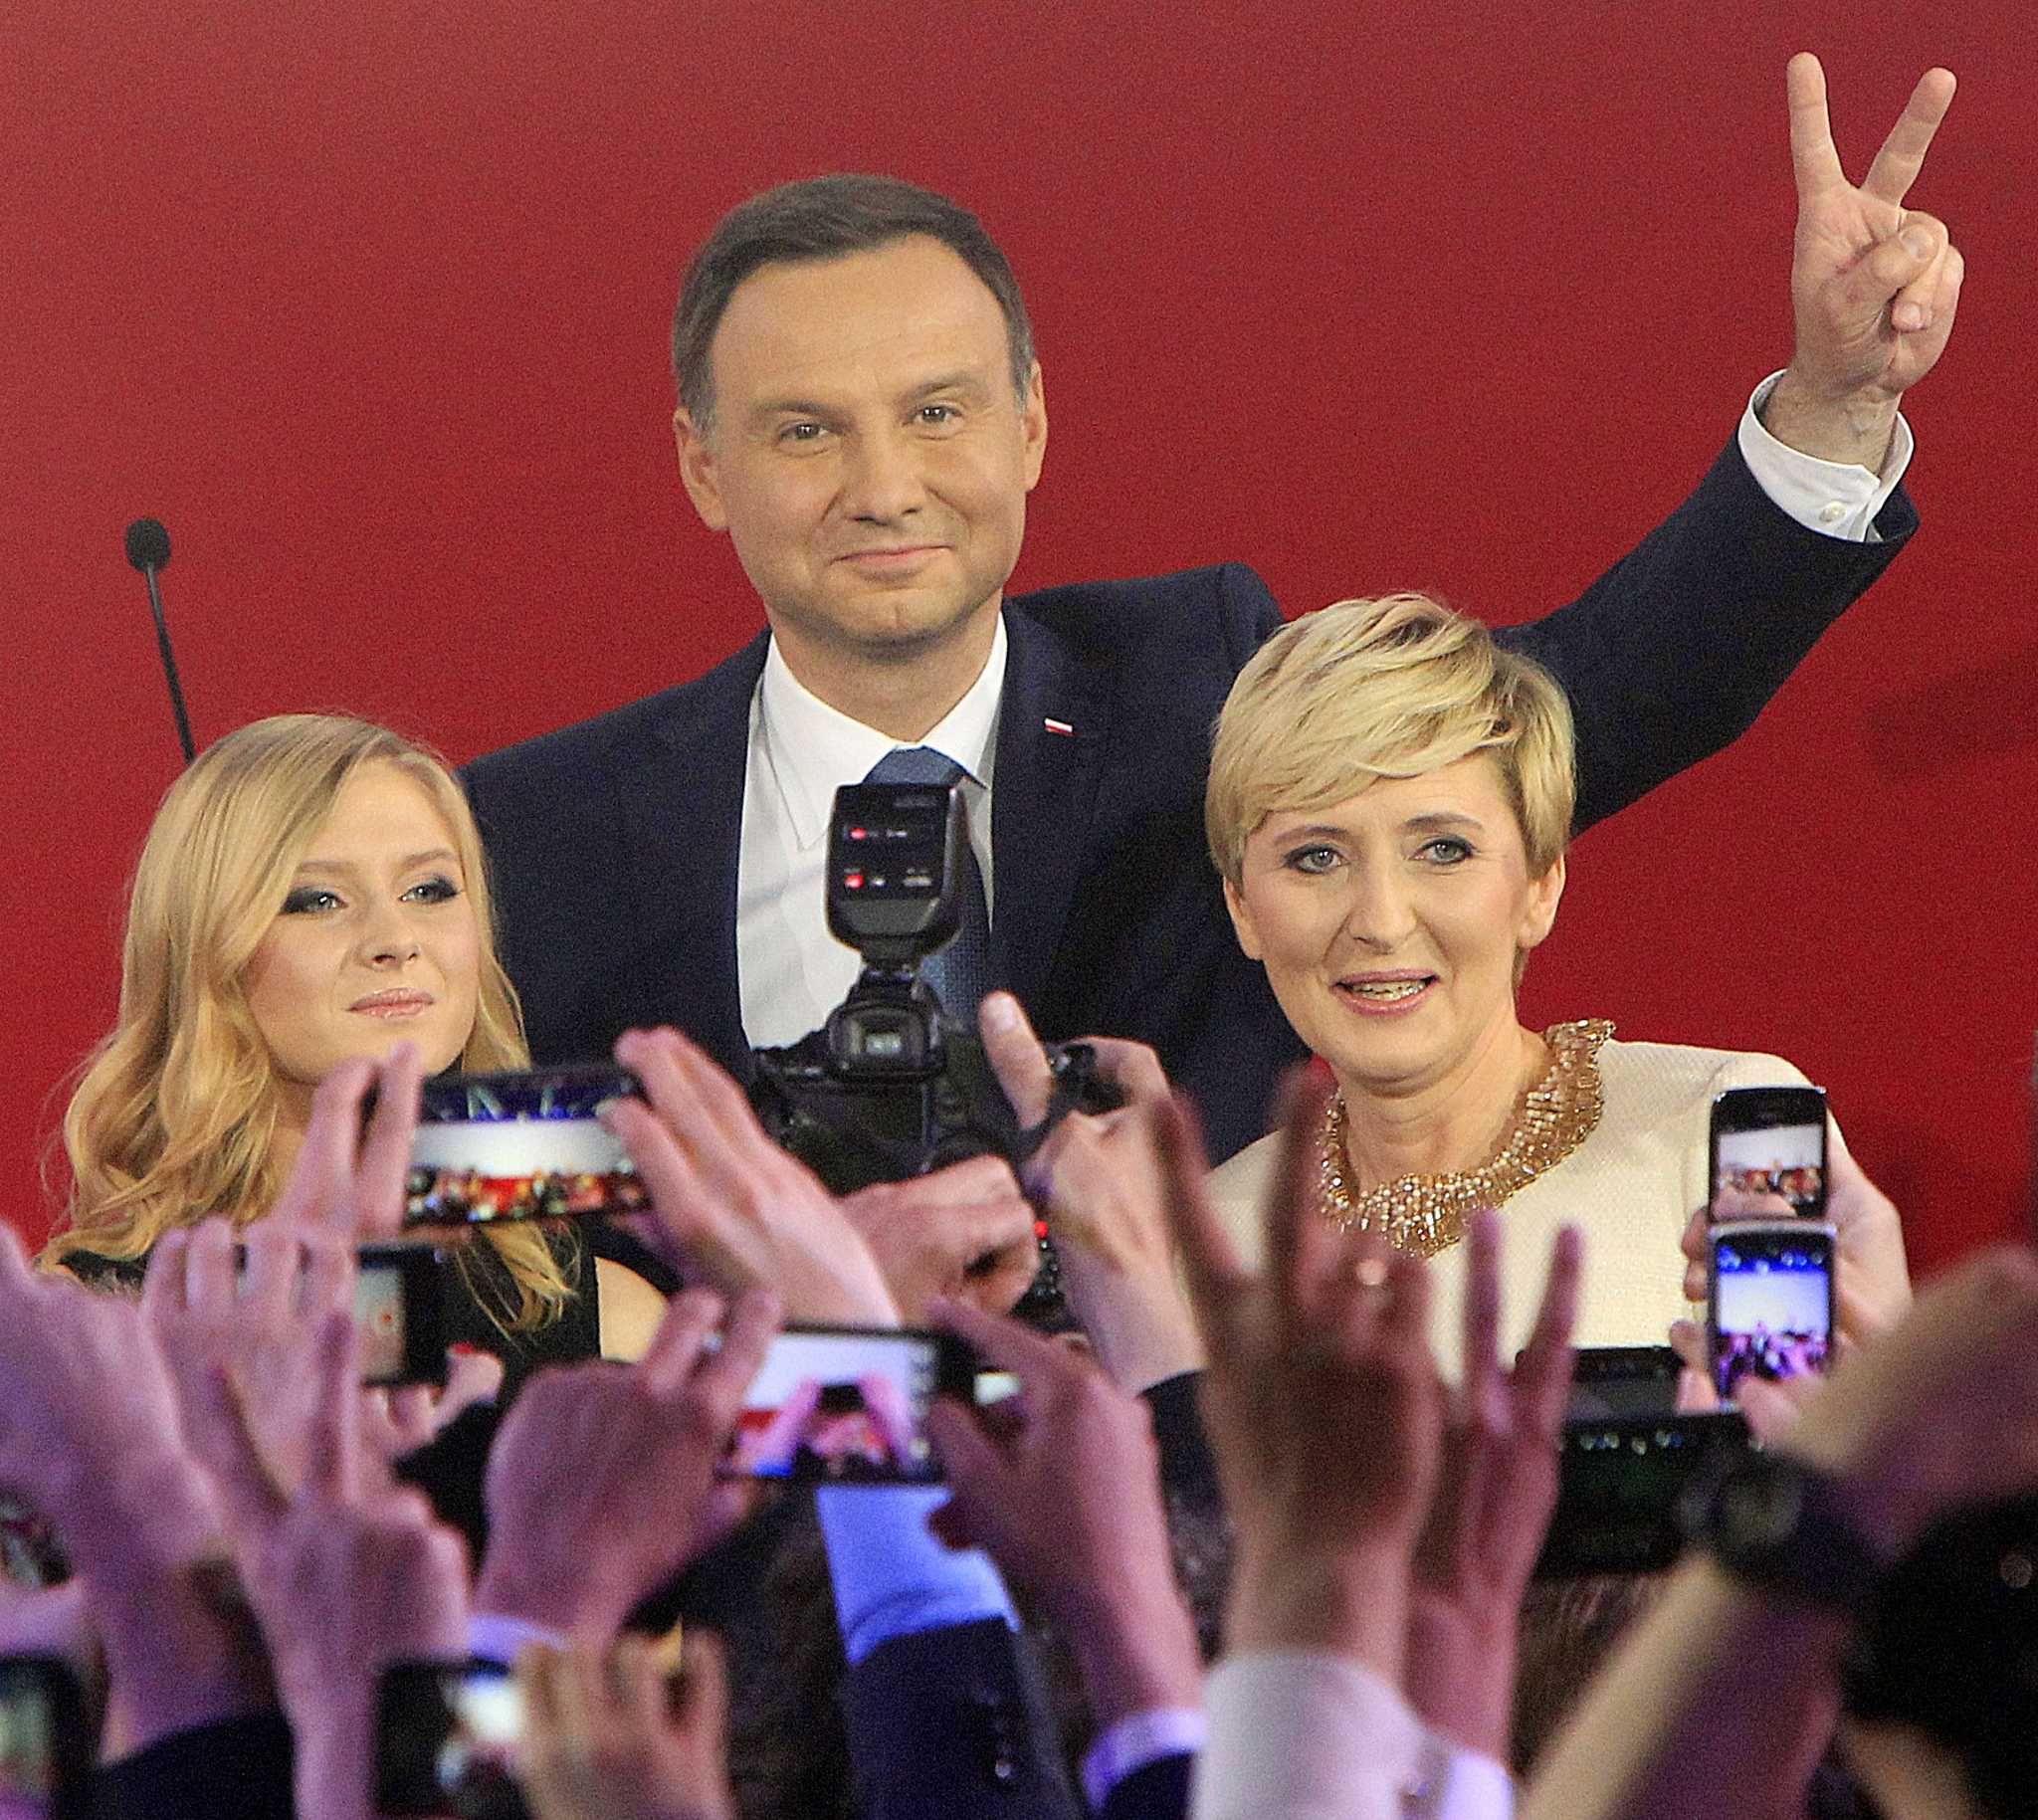 Conservative Challenger Duda Wins Polish Presidential Vote